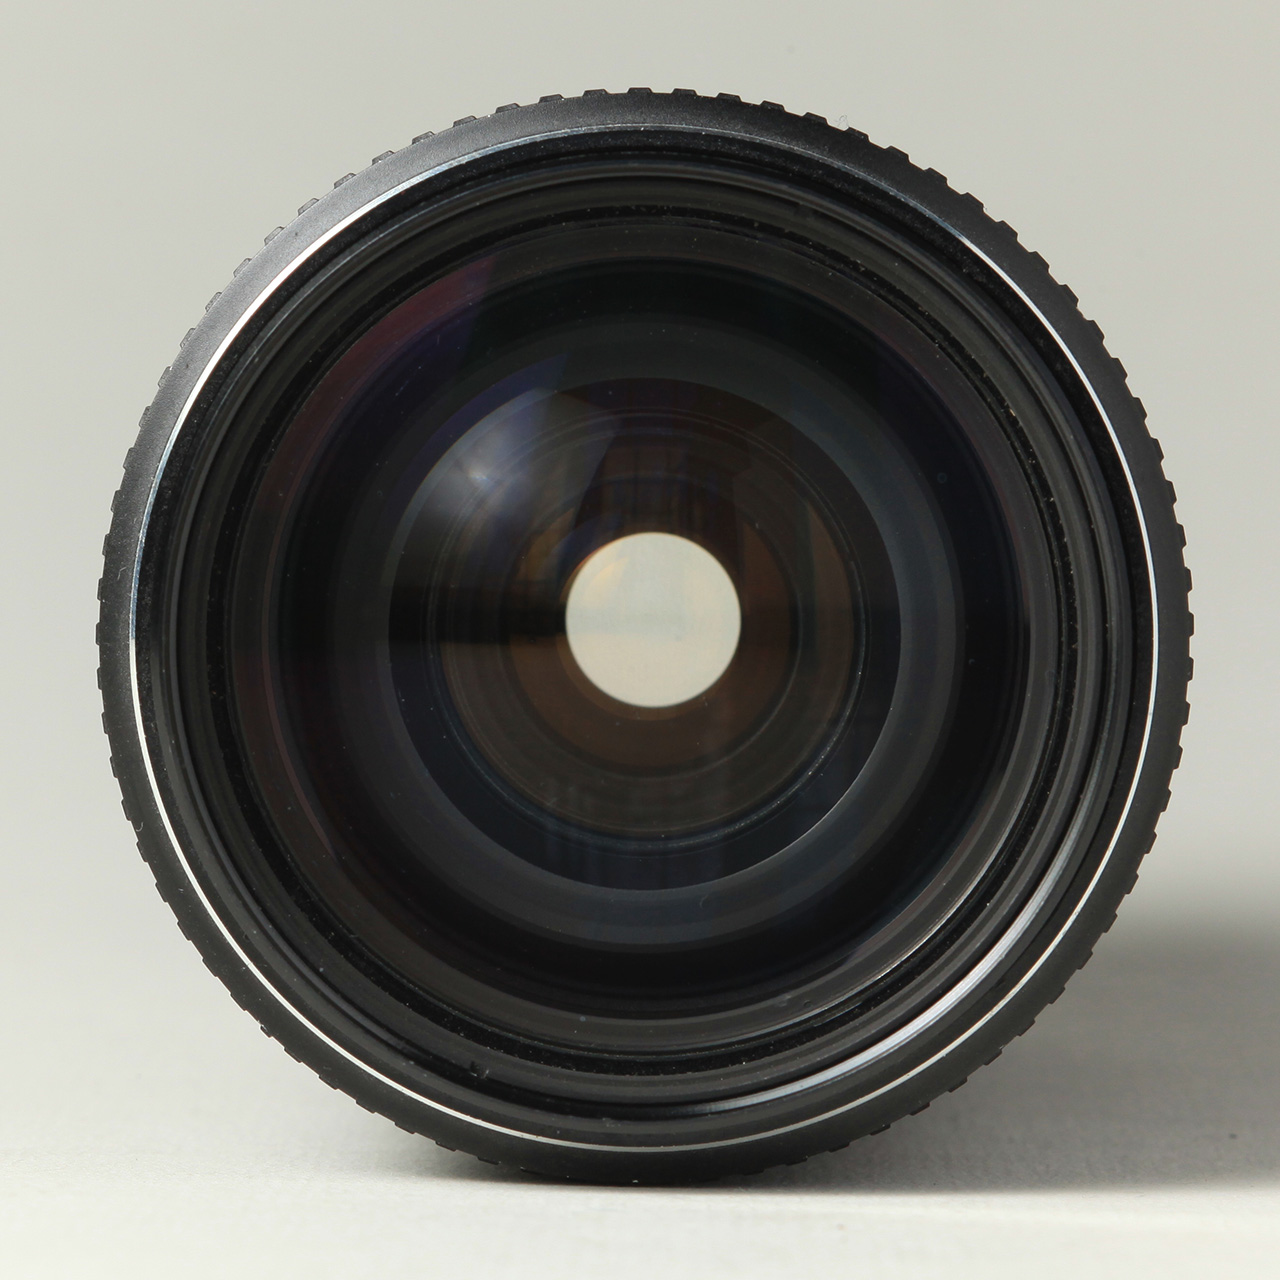 SMC TAKUMAR-ZOOM  1:4/45~125mm - Click to Enlarge